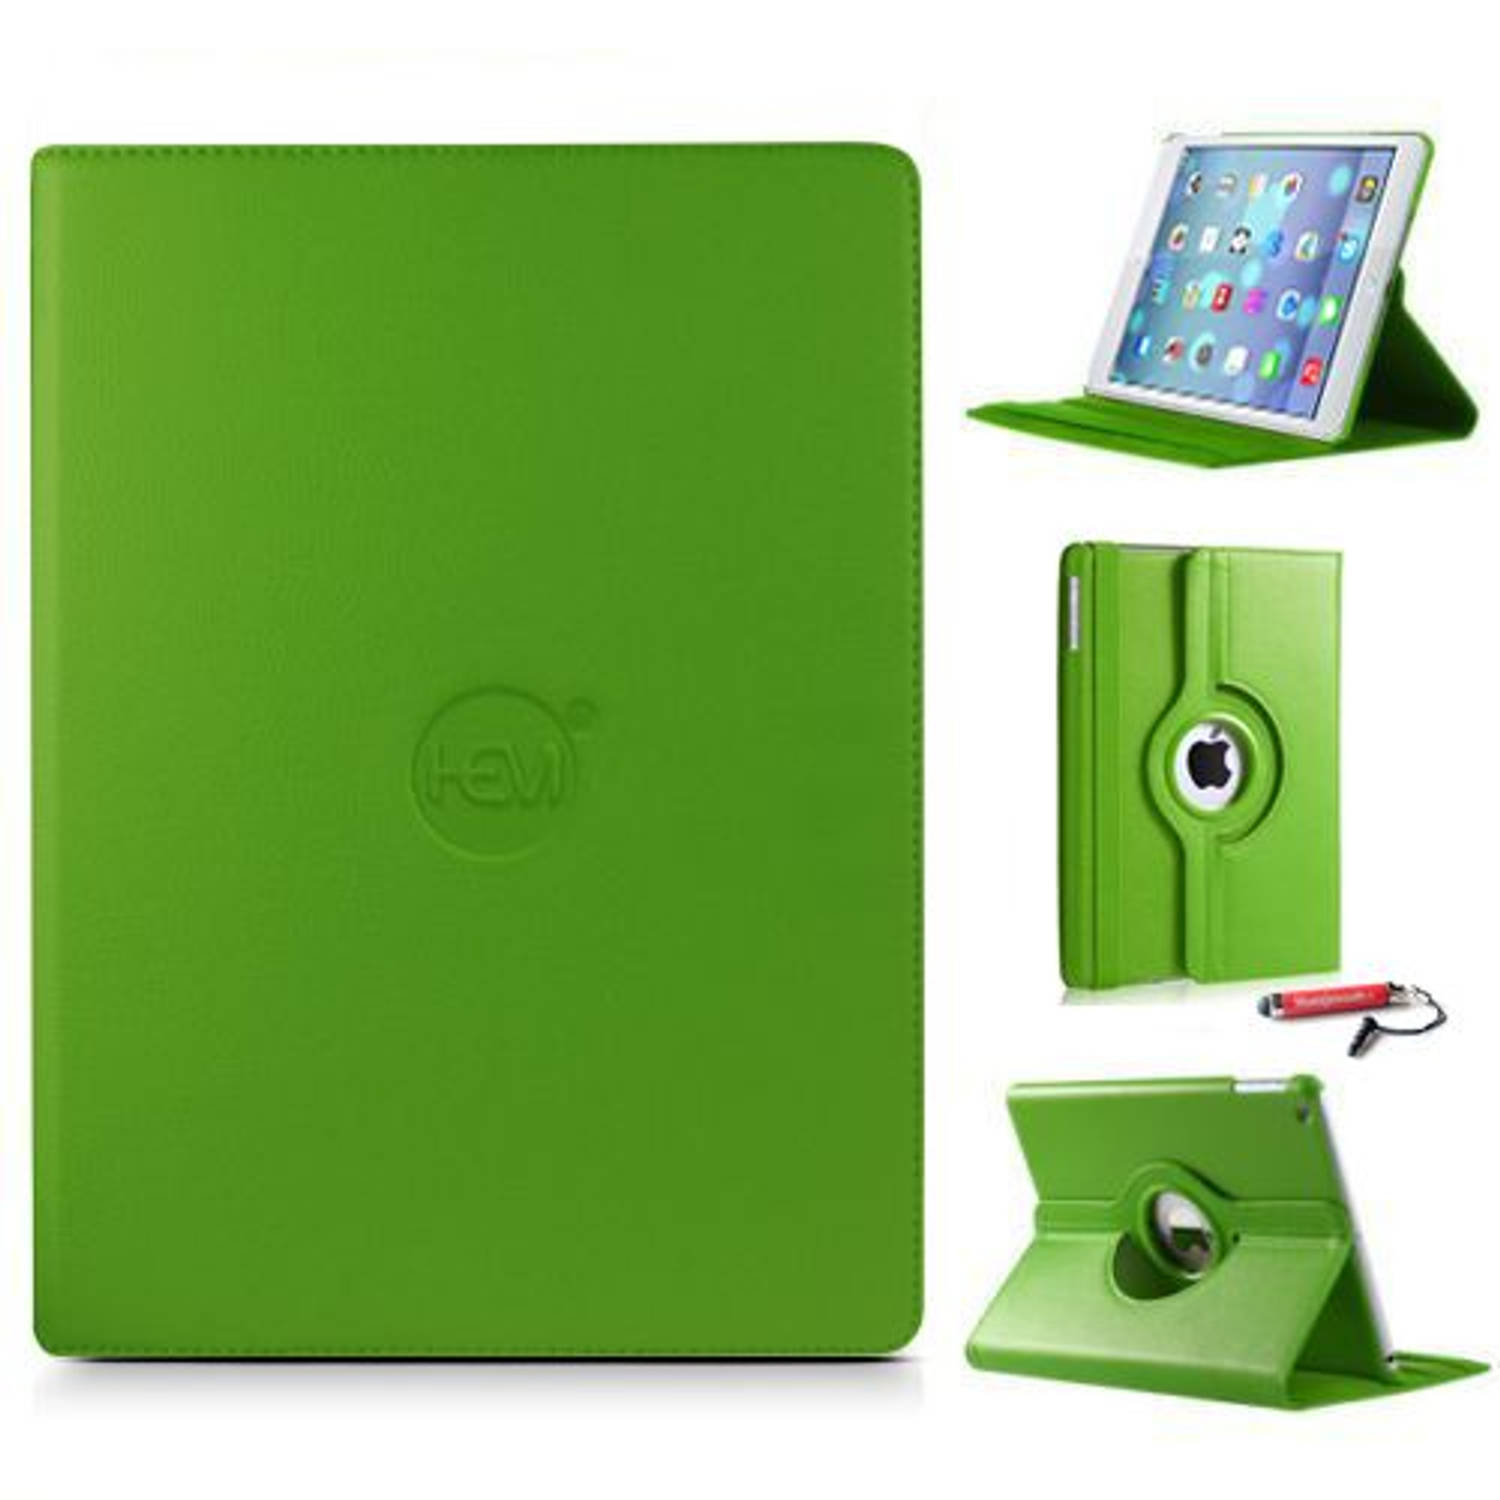 10 inch universele hoes HEM groen met uitschuifbare hoesjesweb stylus - Ipad hoes, Tablethoes